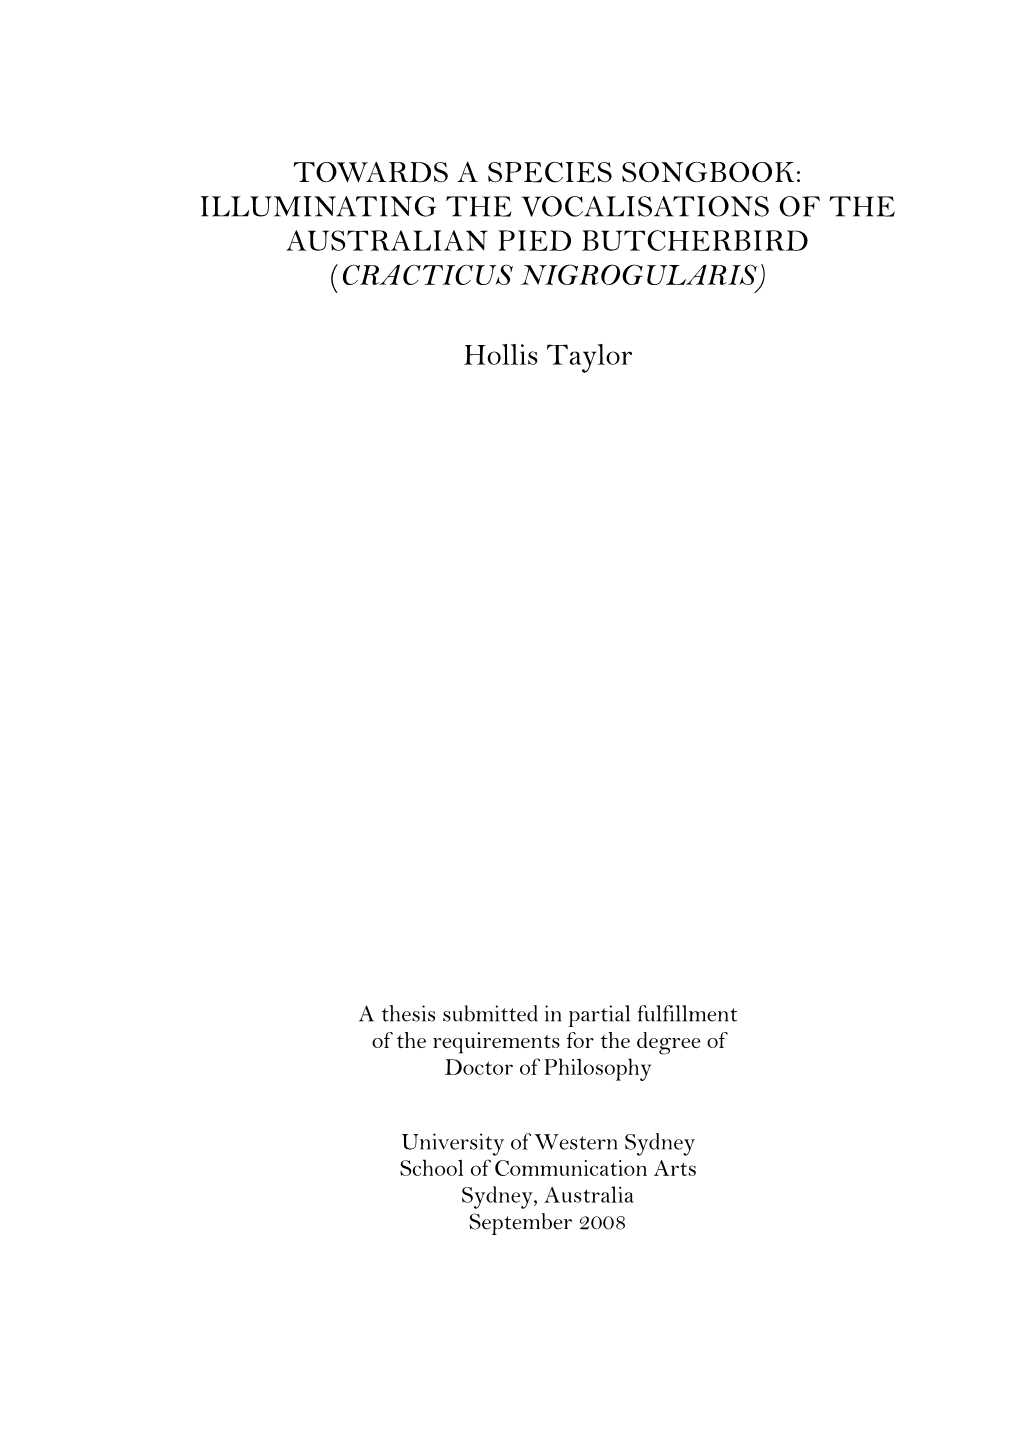 TOWARDS a SPECIES SONGBOOK: ILLUMINATING the VOCALISATIONS of the AUSTRALIAN PIED BUTCHERBIRD (CRACTICUS NIGROGULARIS) Hollis